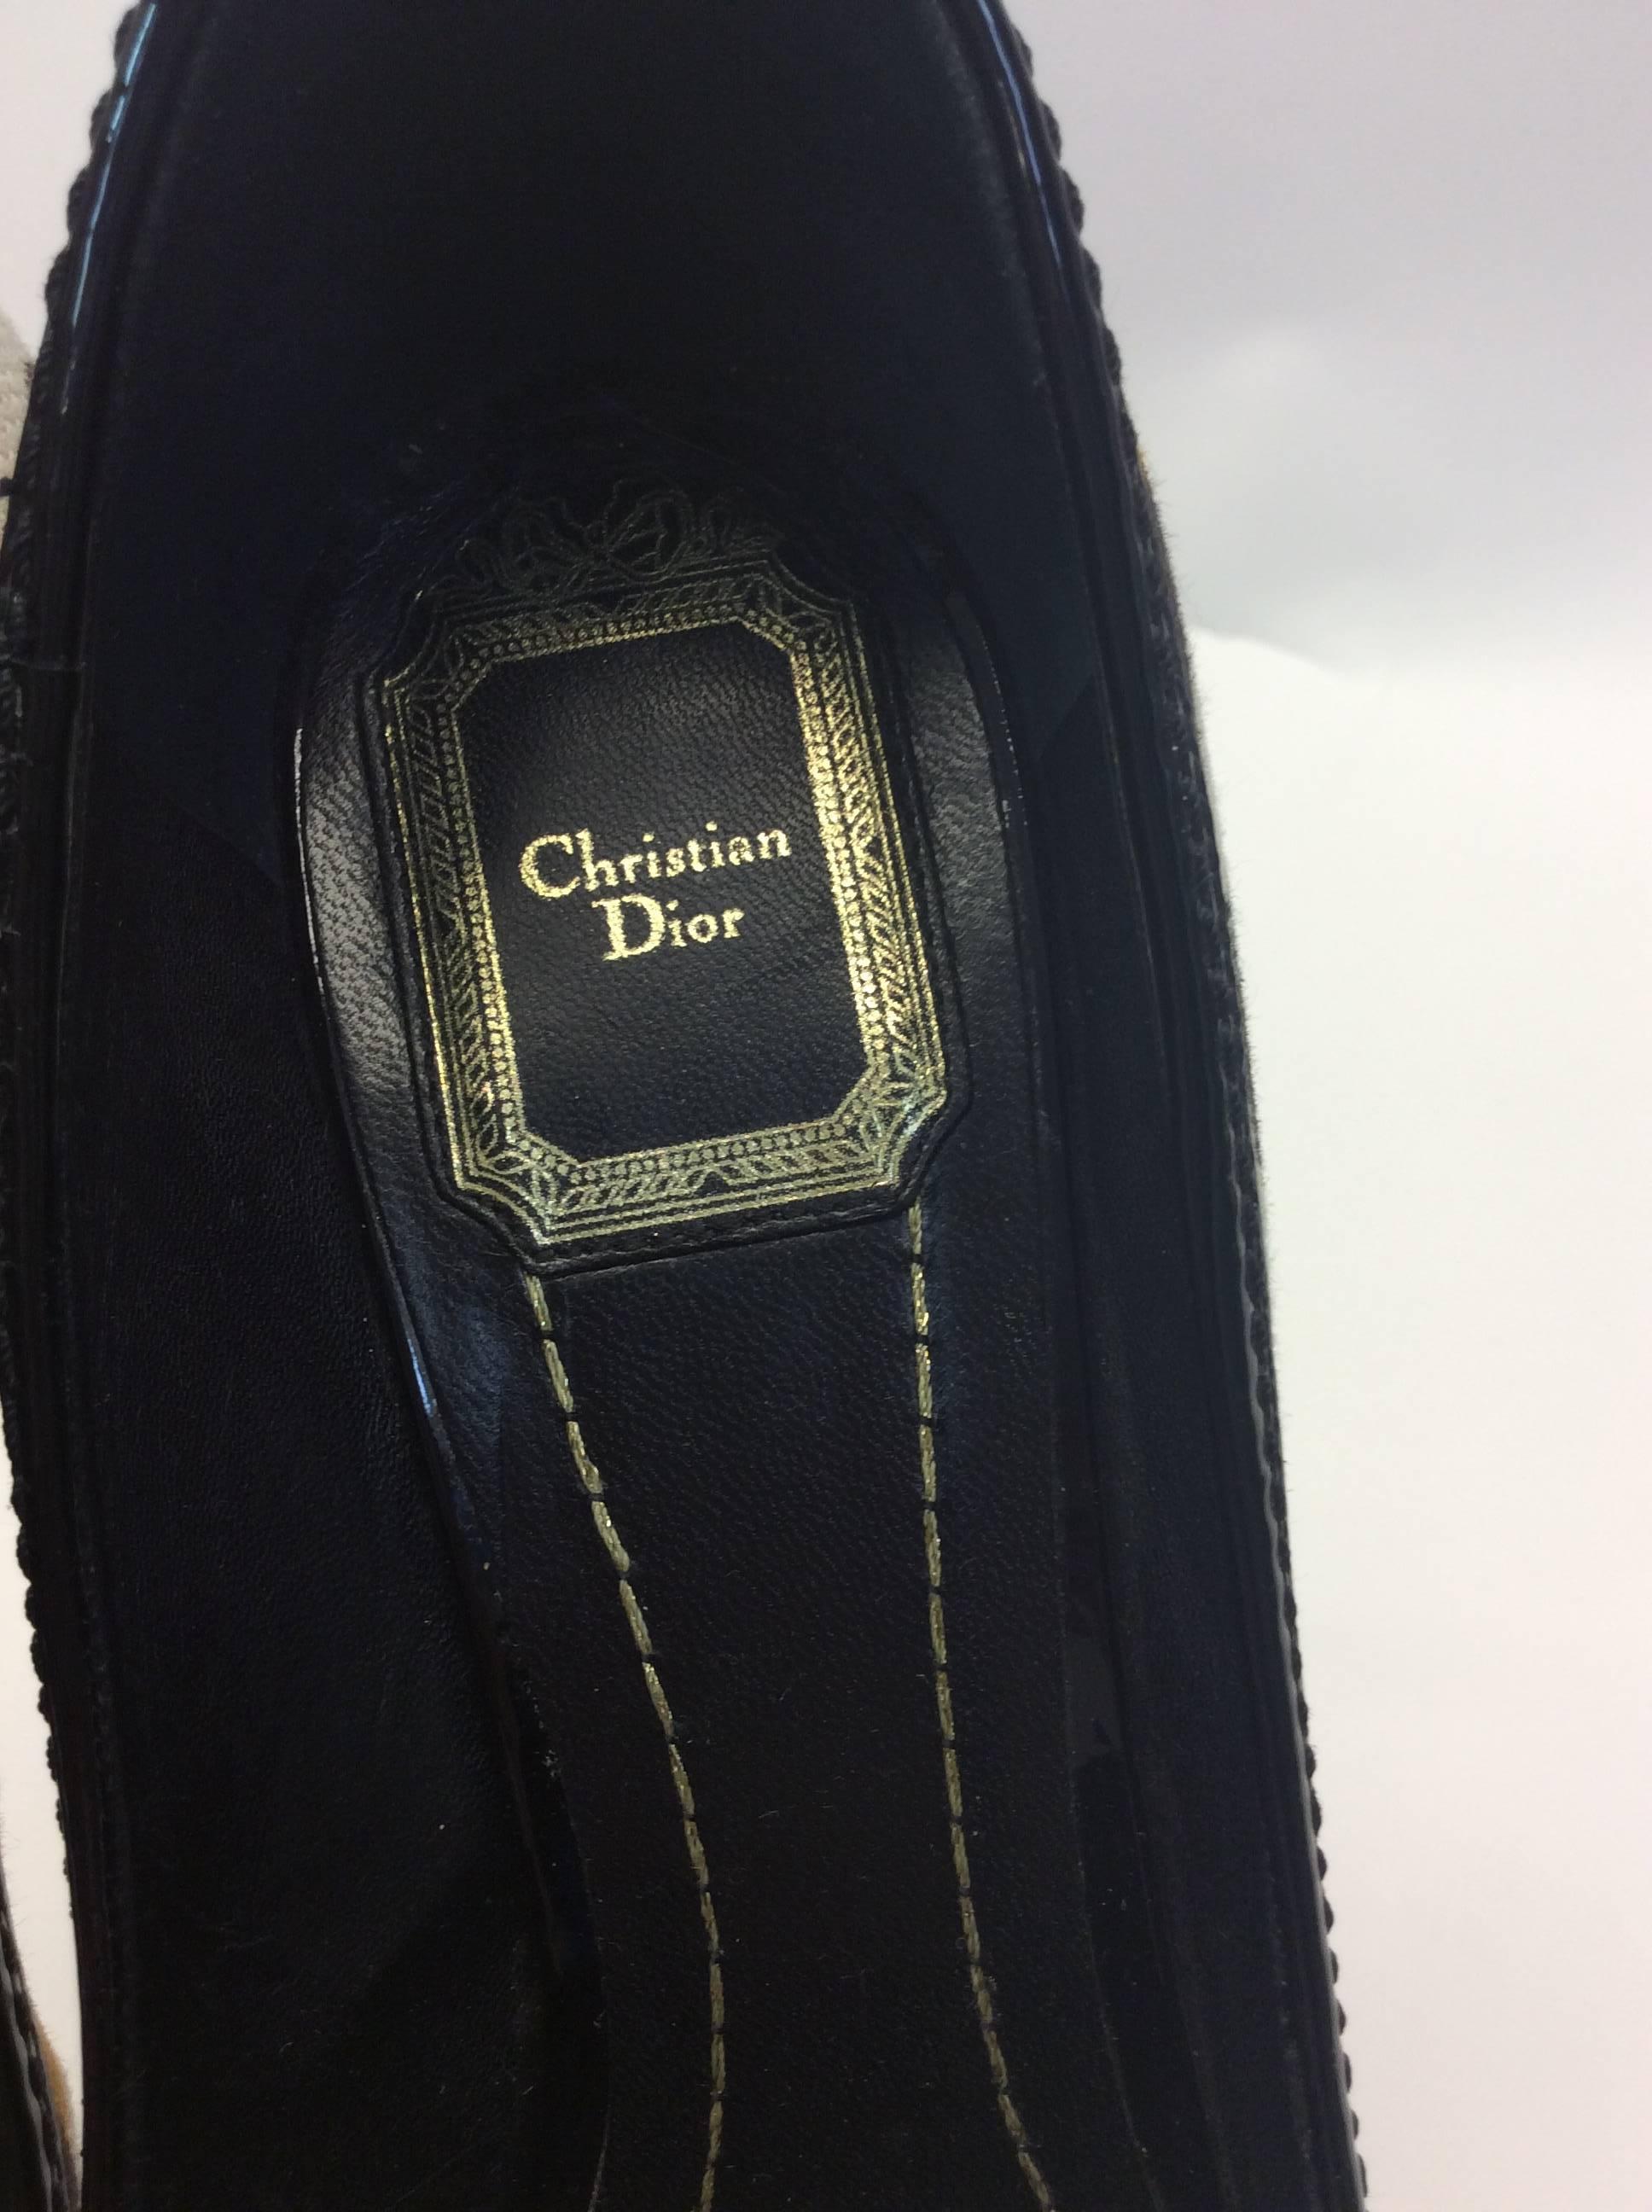 Christian Dior Animal Print Peep Toe Pump with Bow For Sale 1